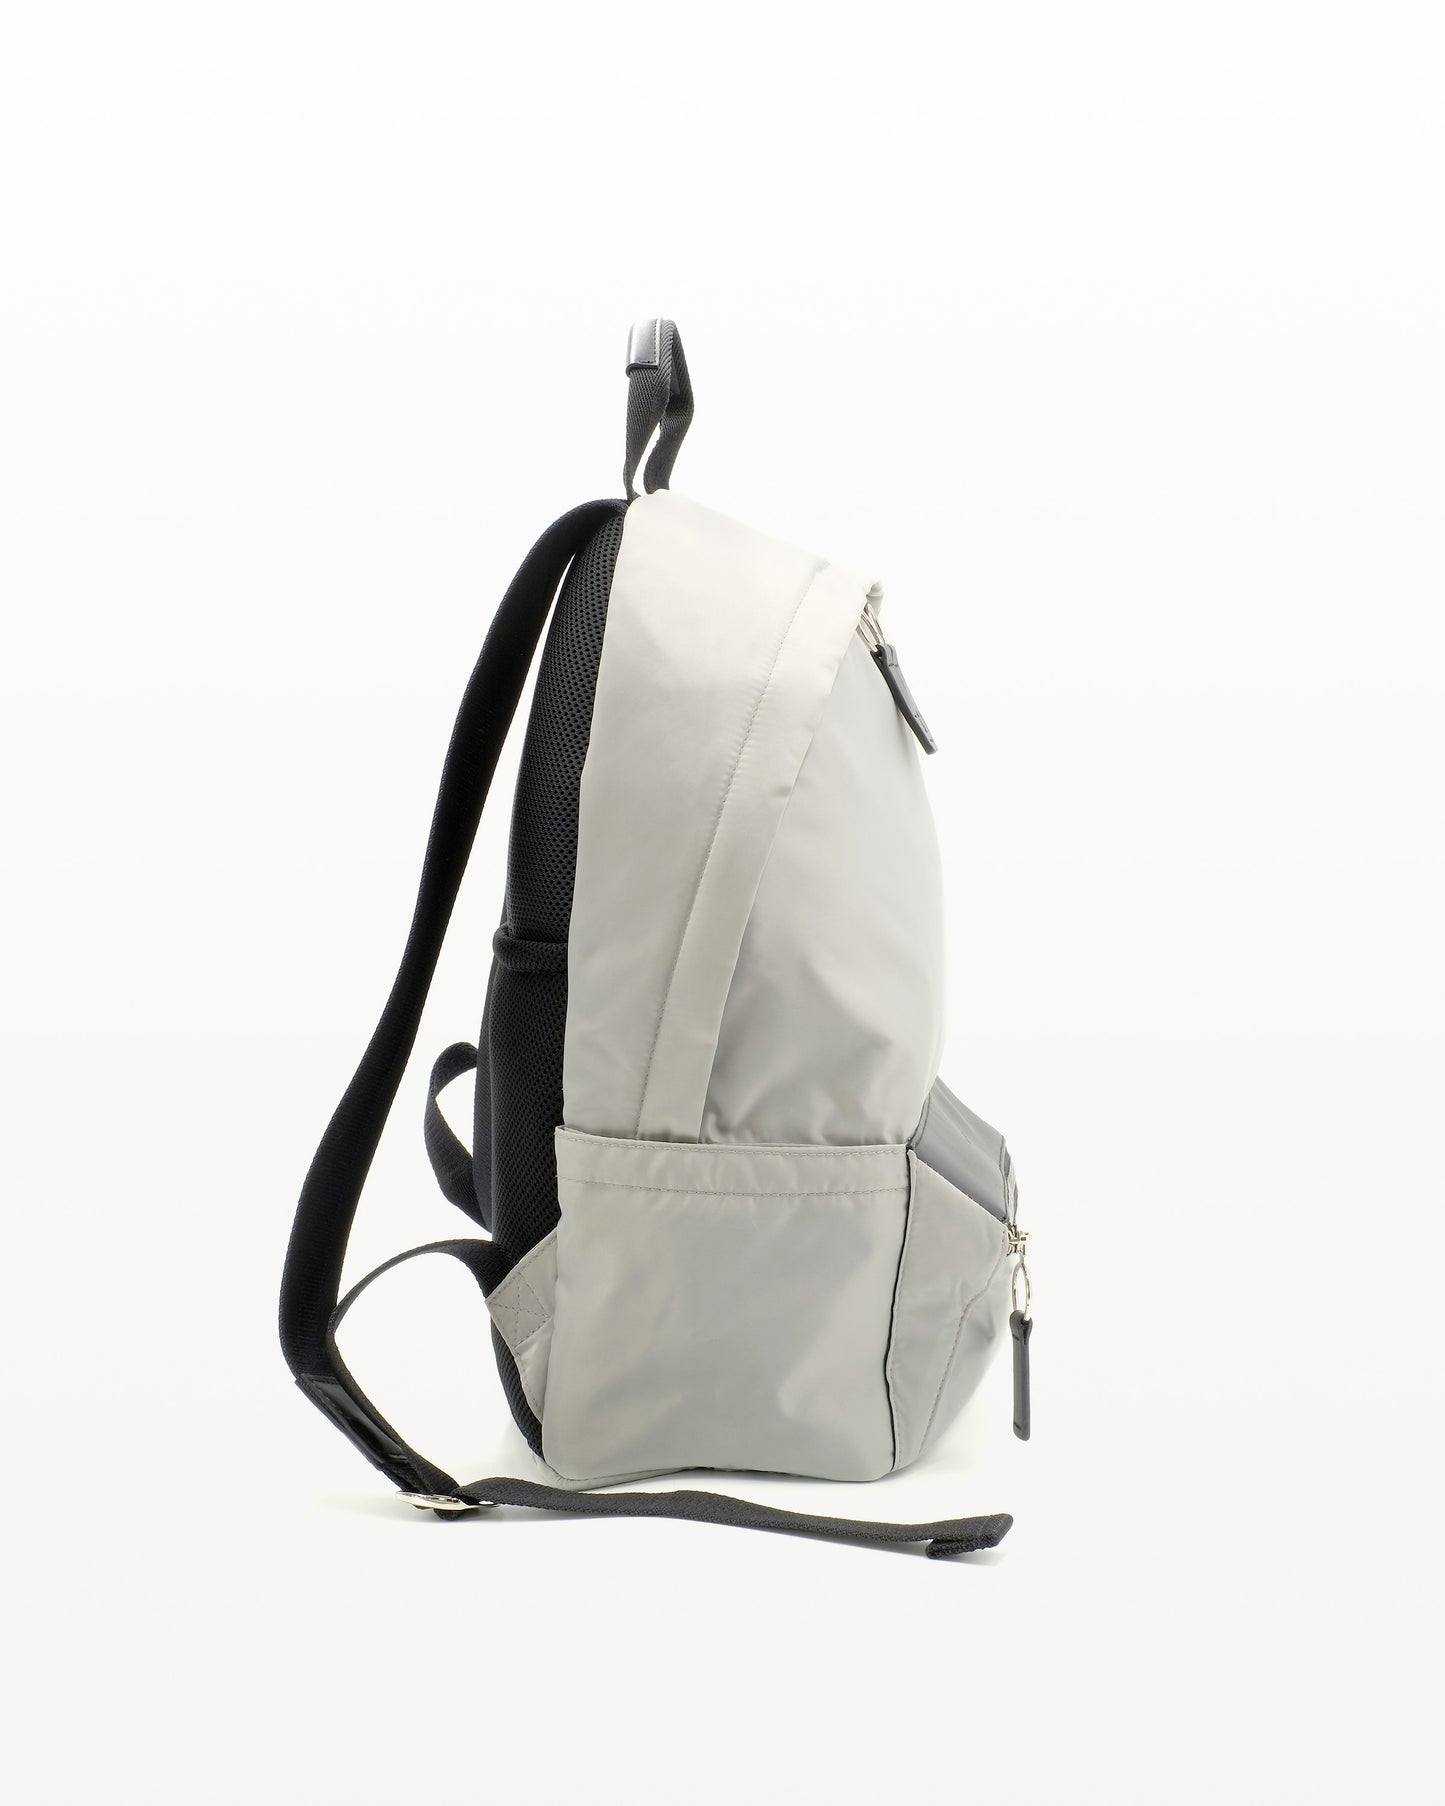 SAMPLE SALE: Flight Backpack - Silver / Grey